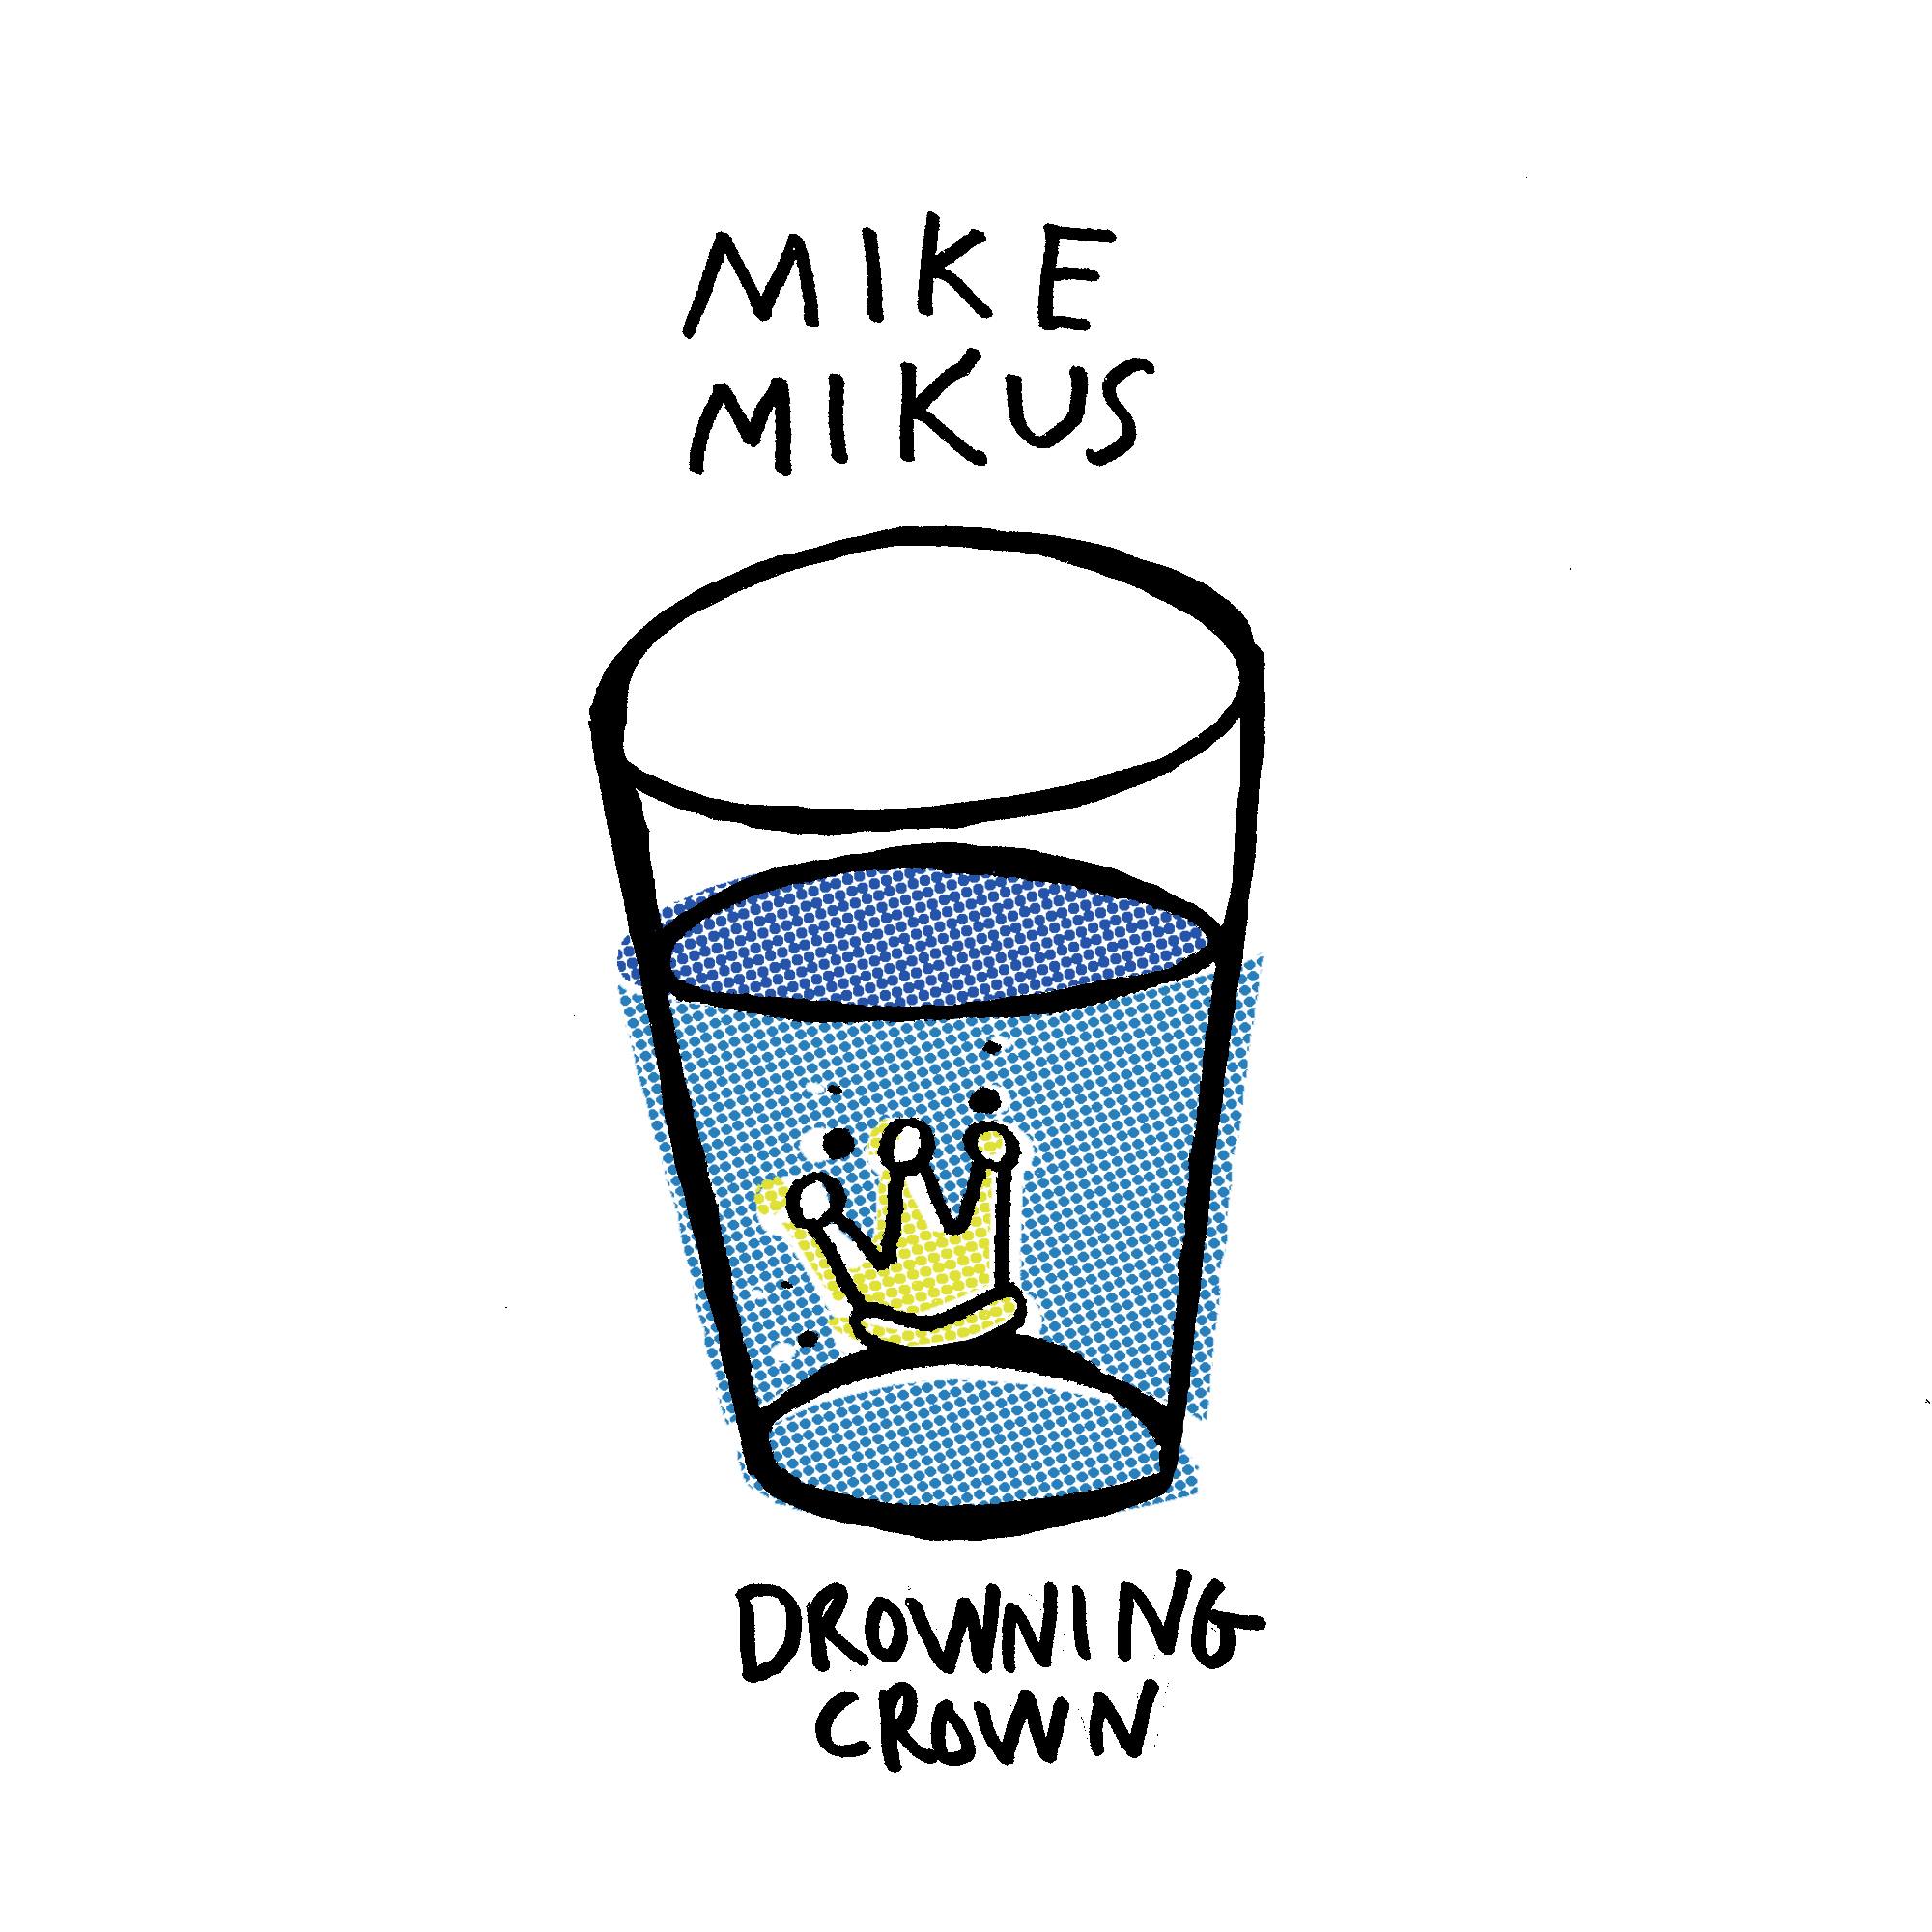 Drowning Crown